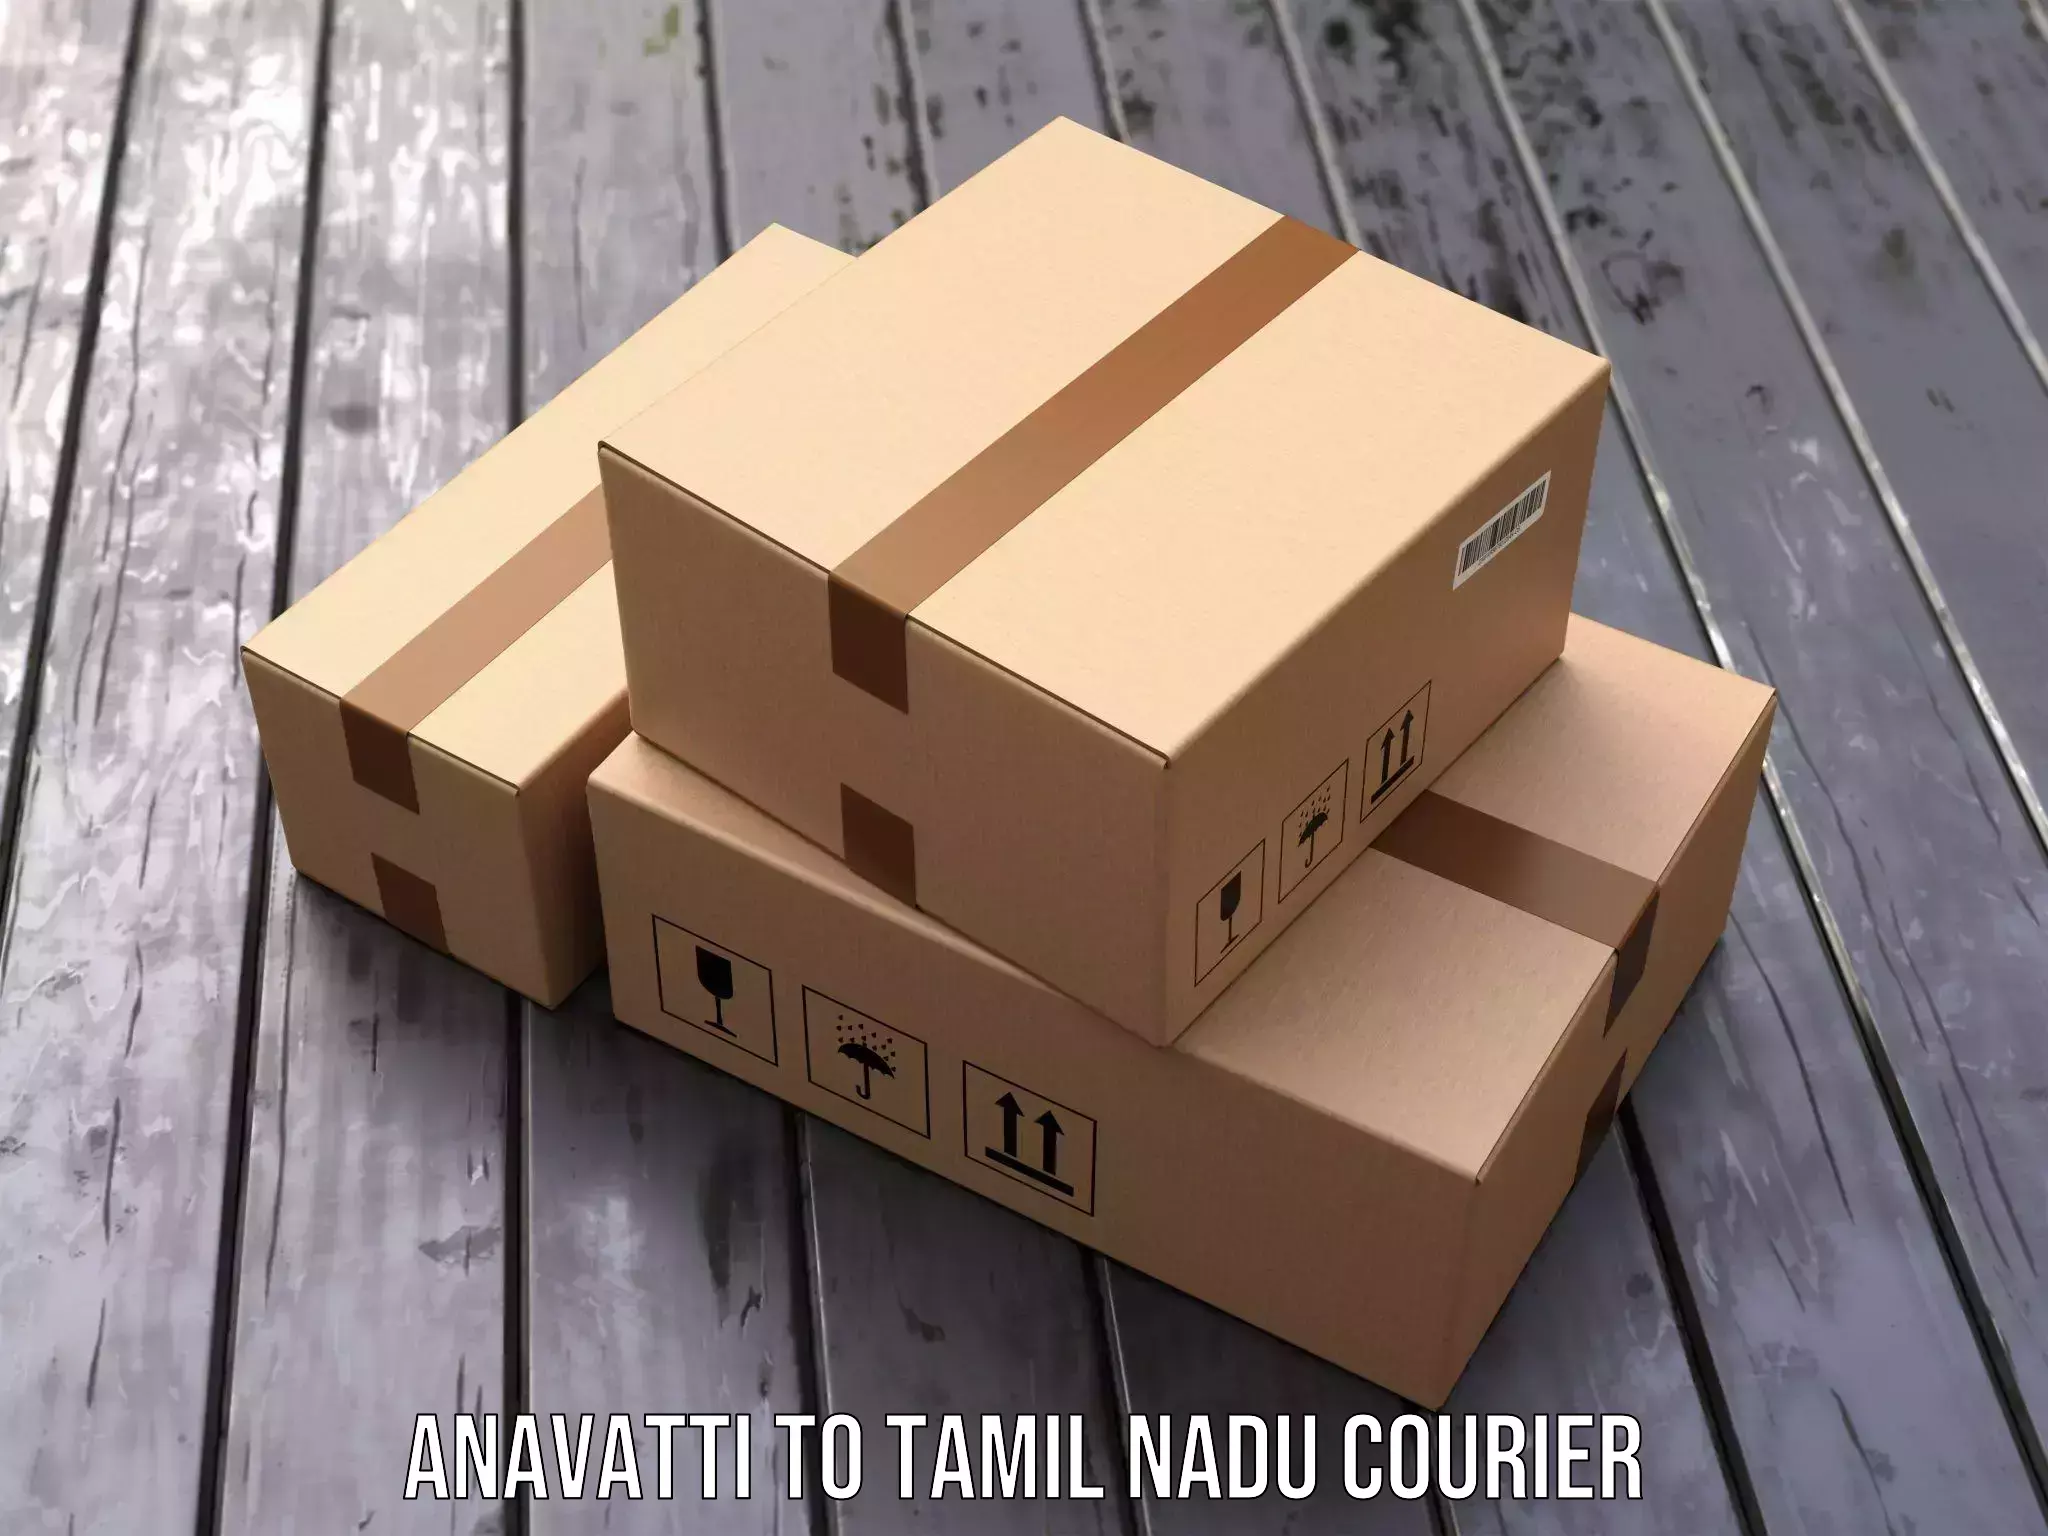 Courier service comparison Anavatti to Tiruvannamalai